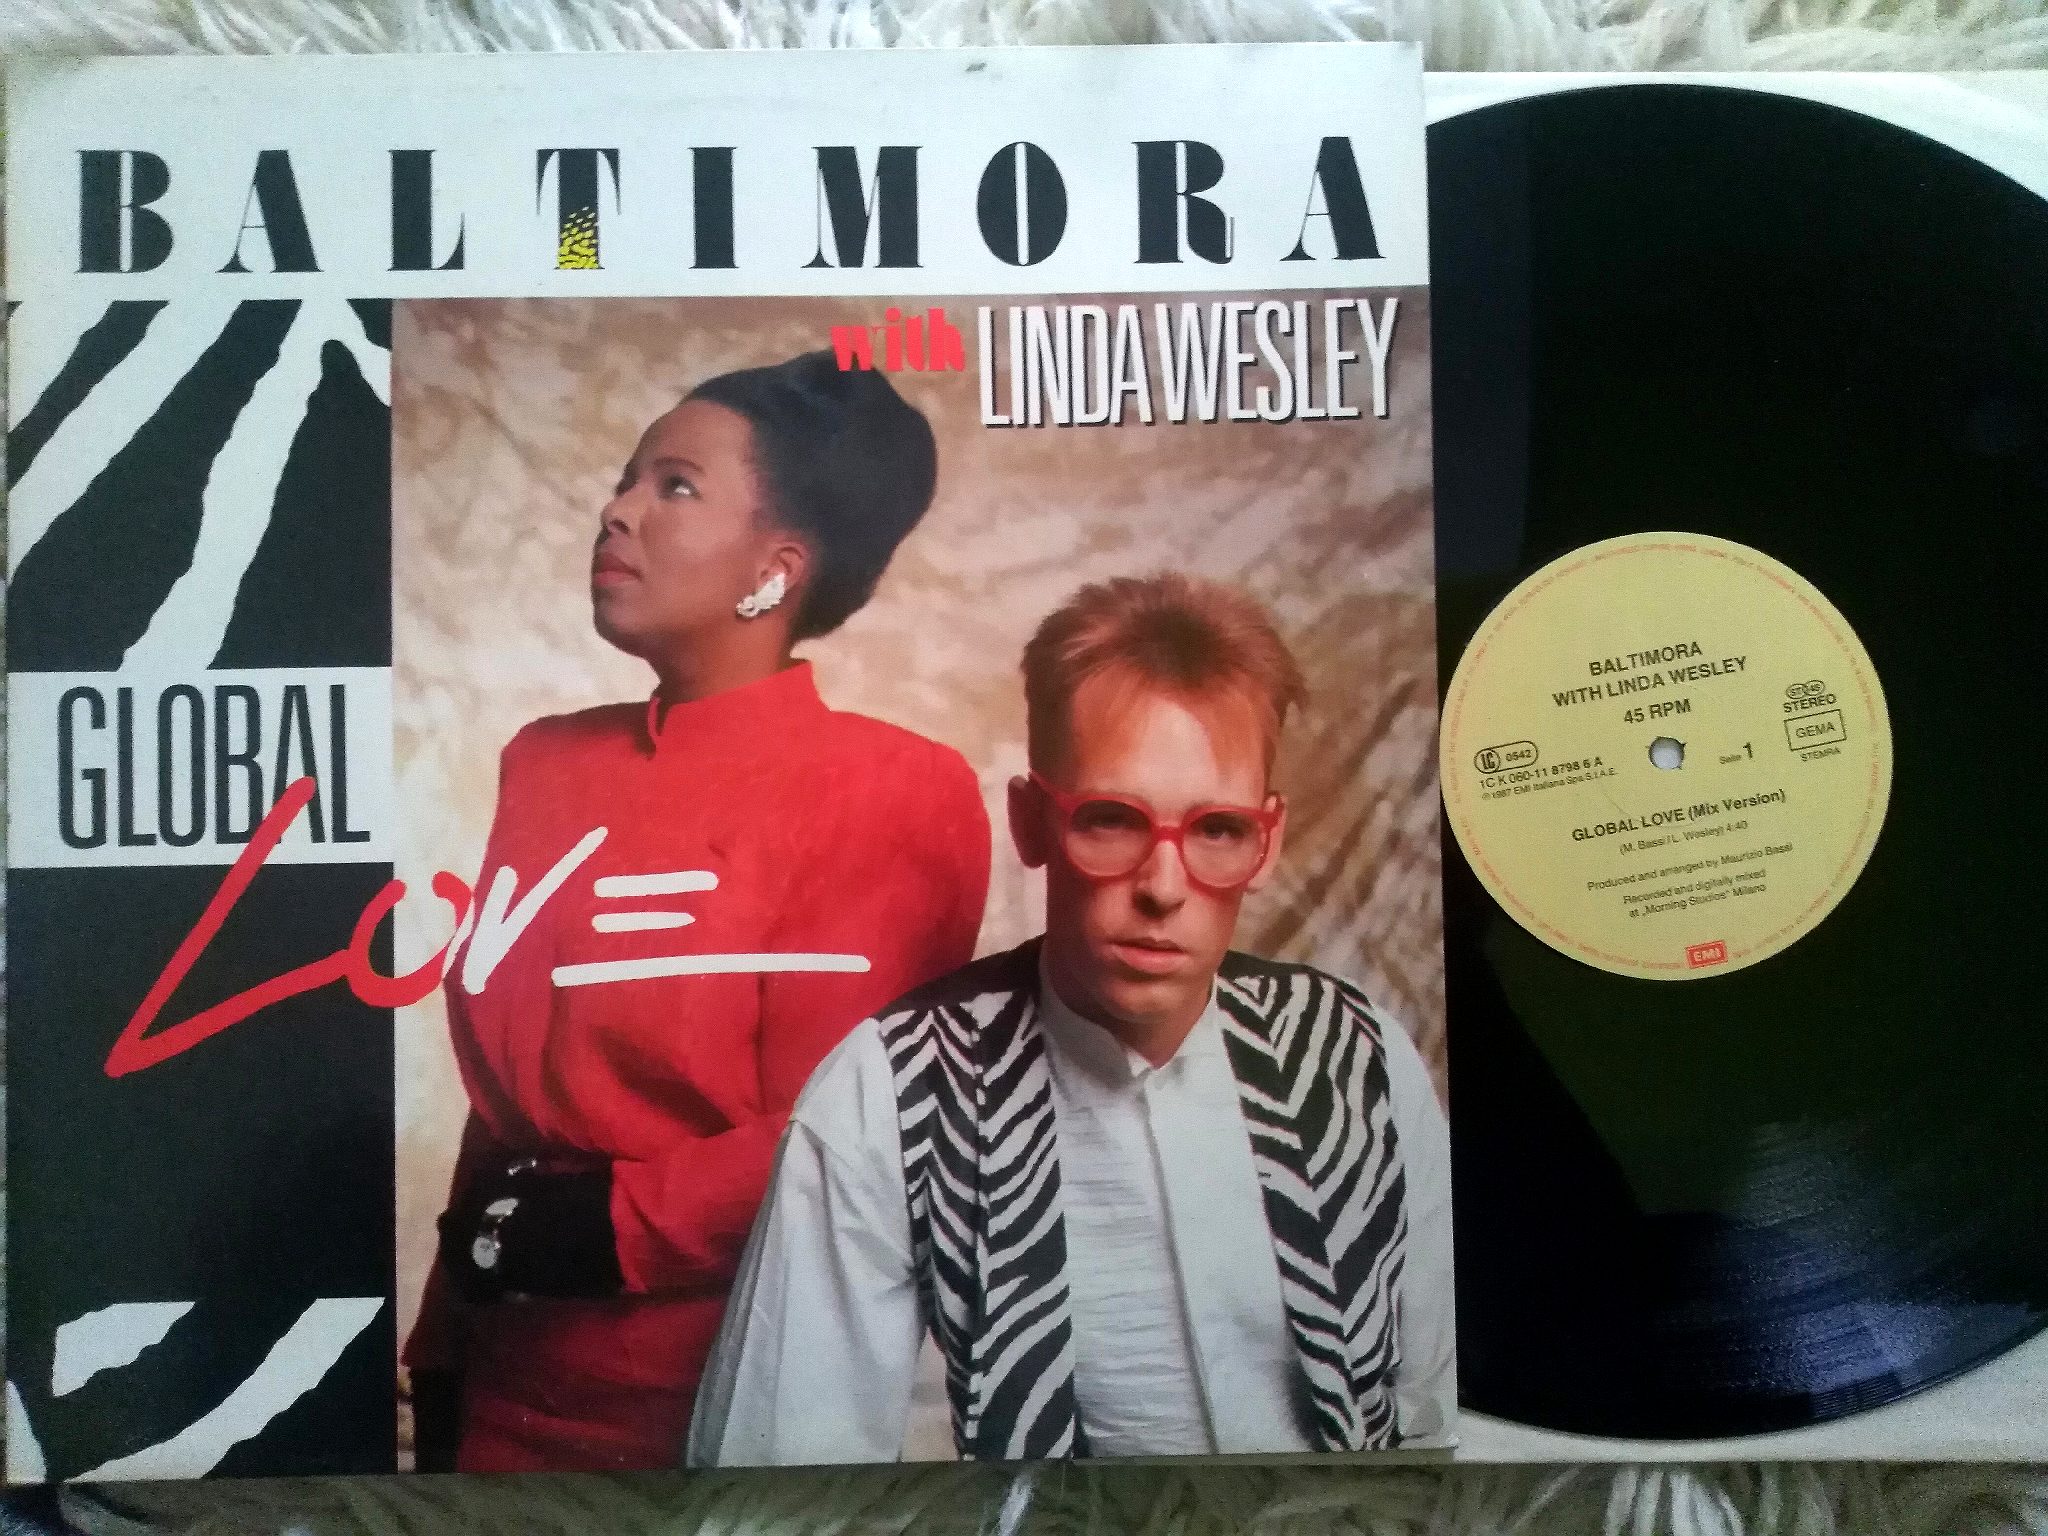 Baltimora with Linda Wesley - Global Love